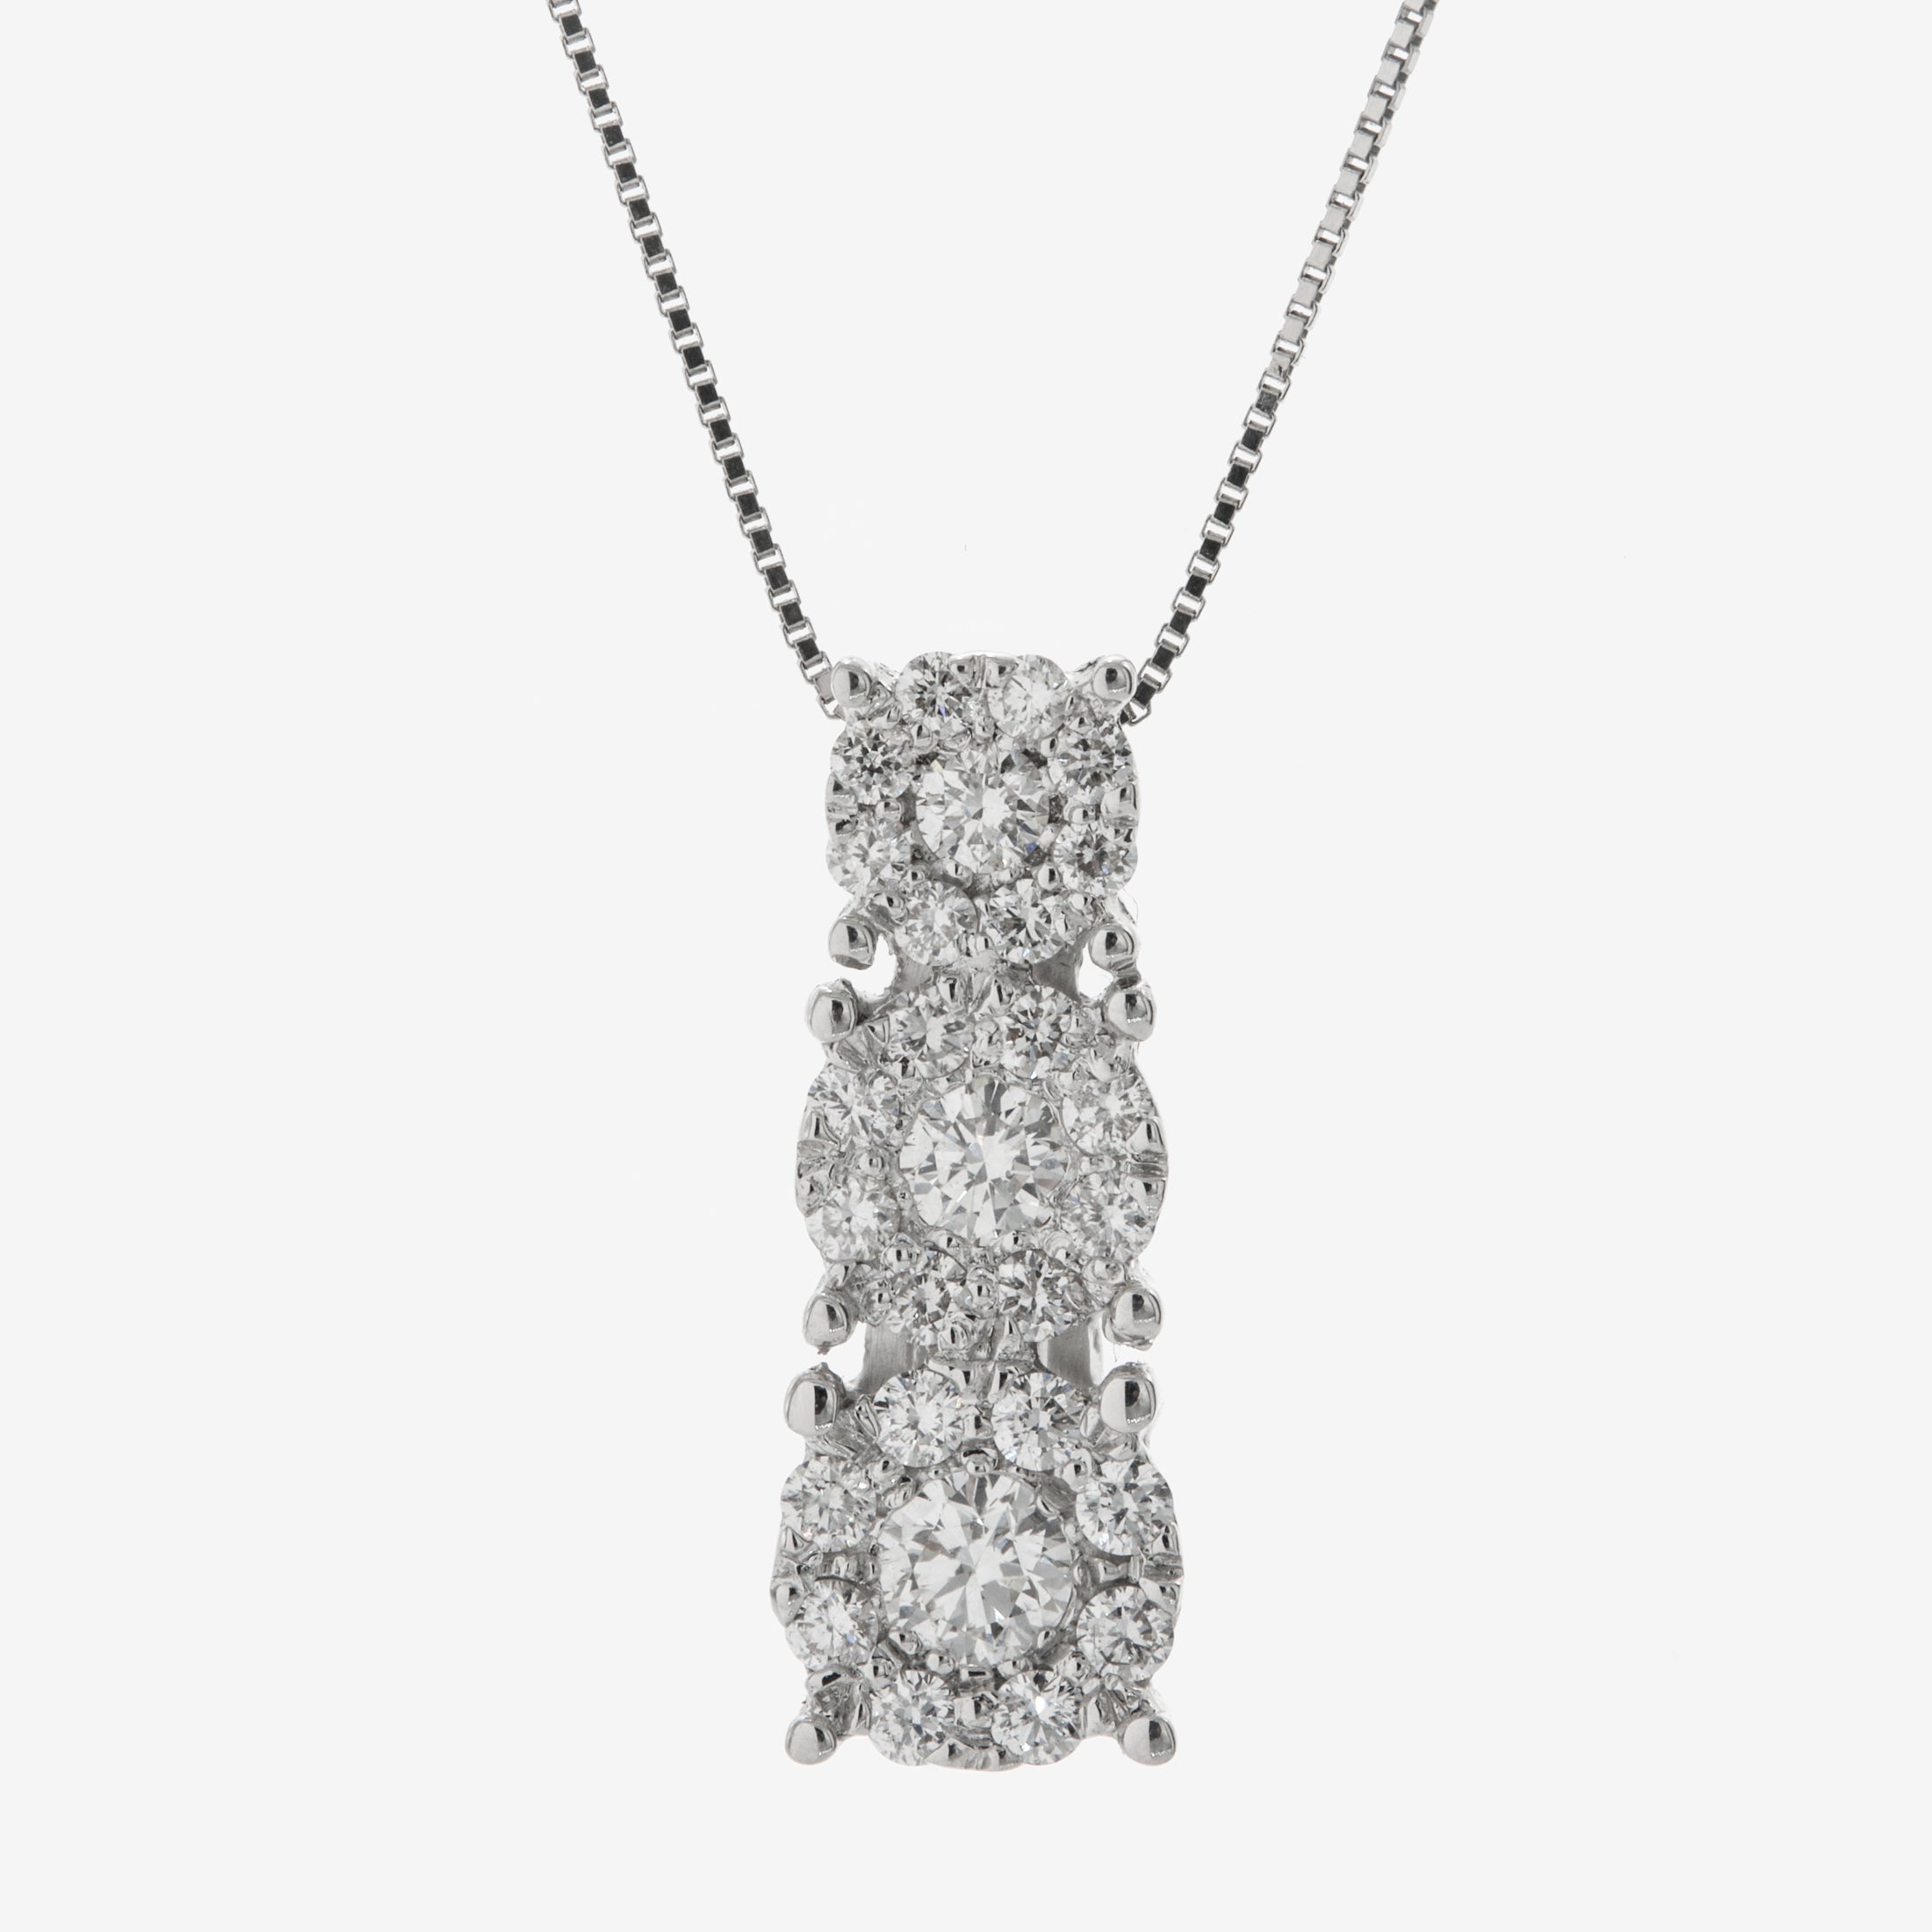 Elam necklace with diamonds